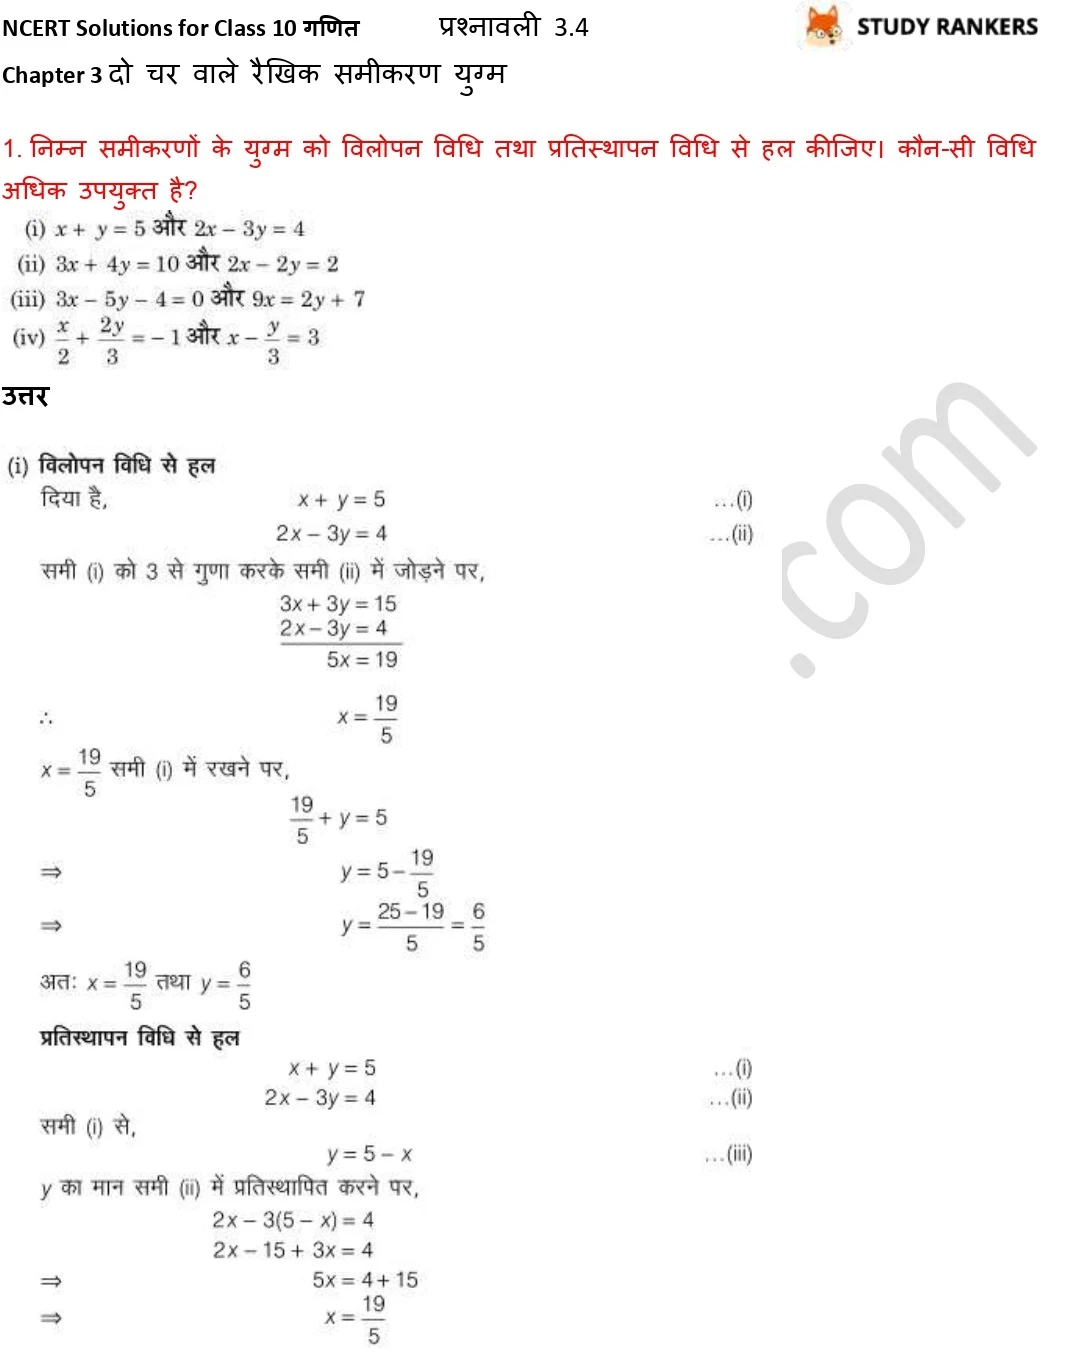 NCERT Solutions for Class 10 Maths Chapter 3 दो चर वाले रैखिक समीकरण युग्म प्रश्नावली 3.4 Part 1